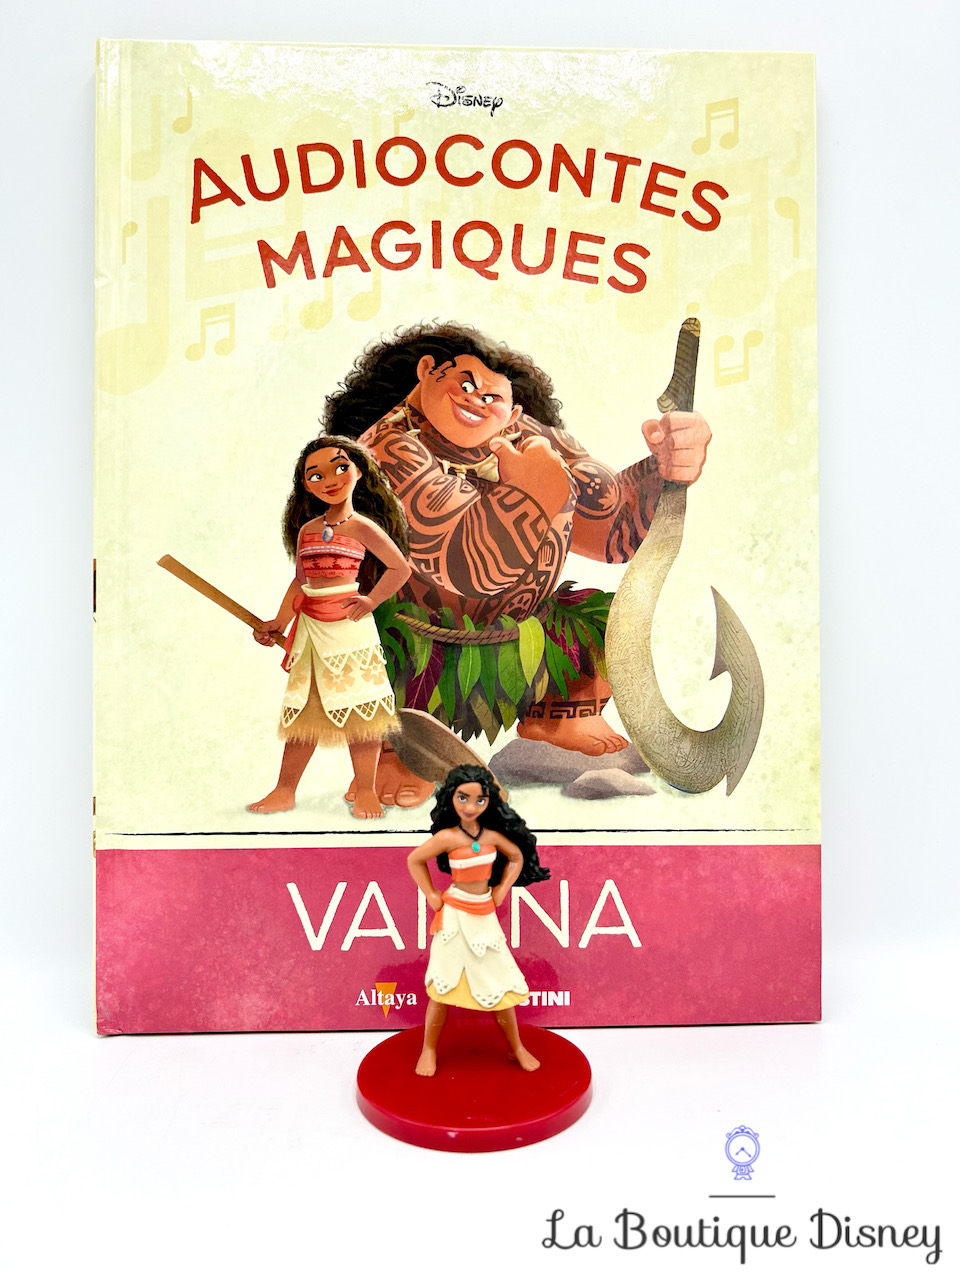 Livre Audiocontes Magiques Vaiana Disney Altaya encyclopédie figurine